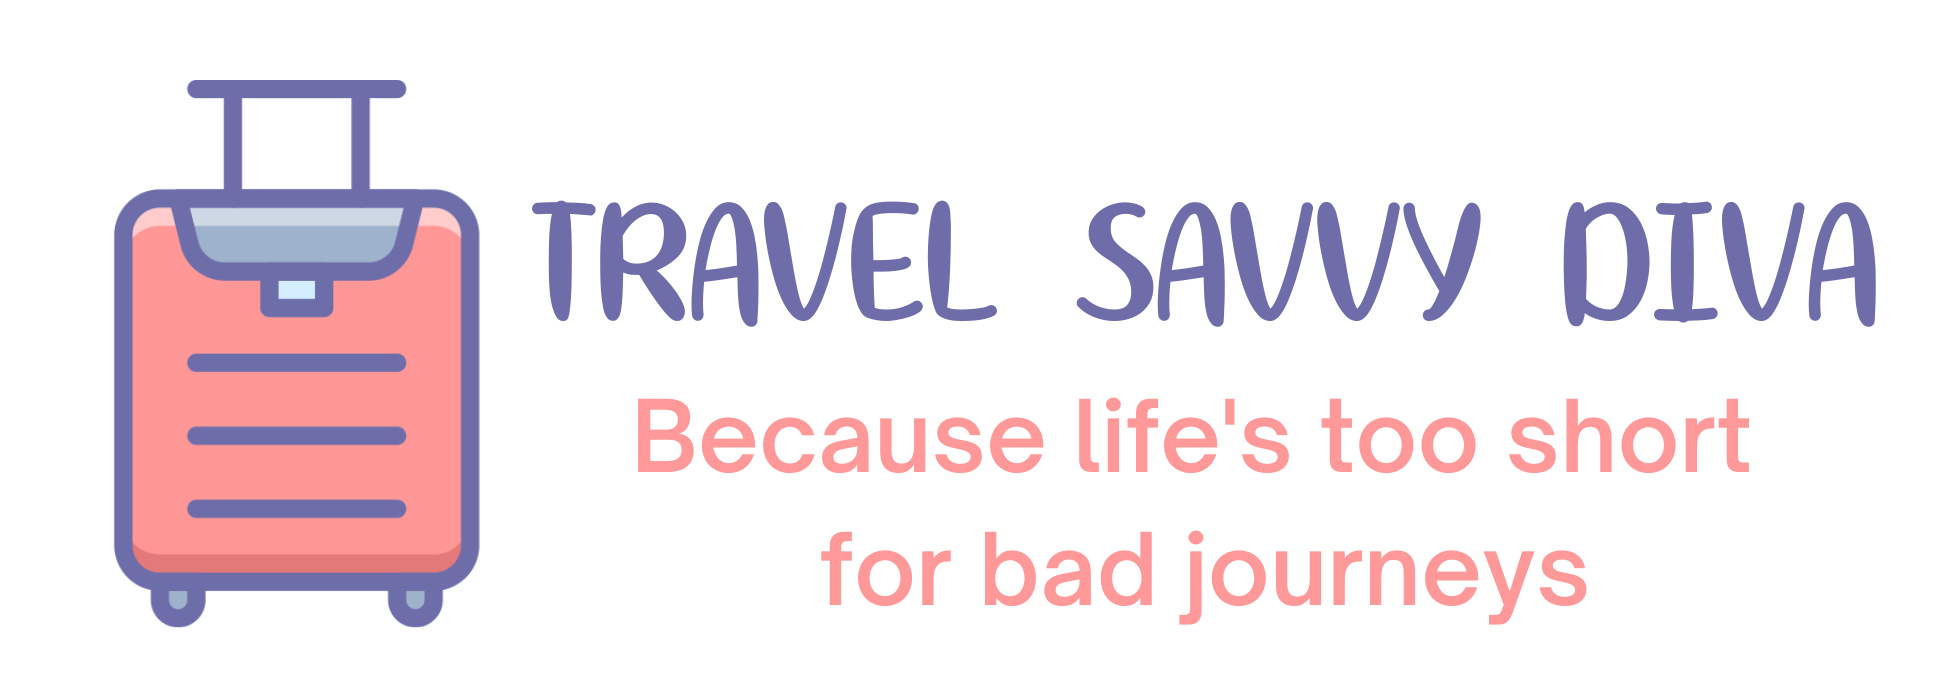 Travel Savvy Diva